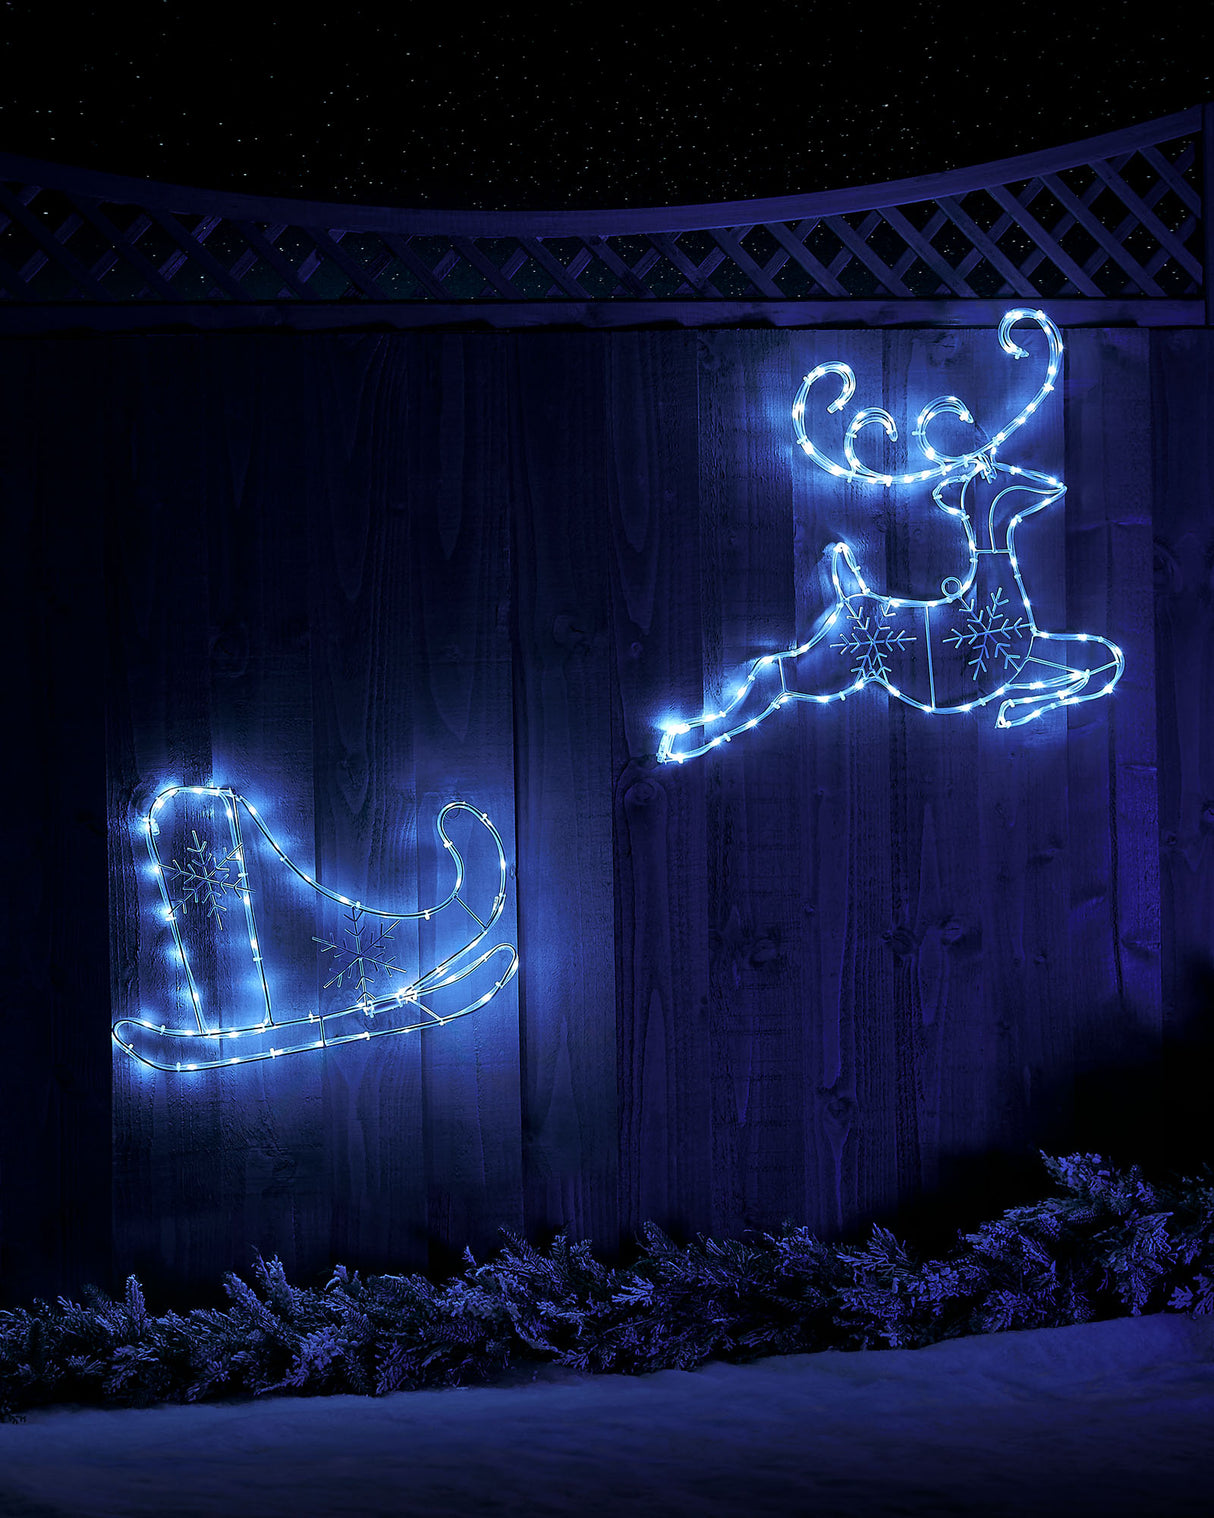 Santa Sleigh with Reindeer Rope Light Silhouette, 60 cm